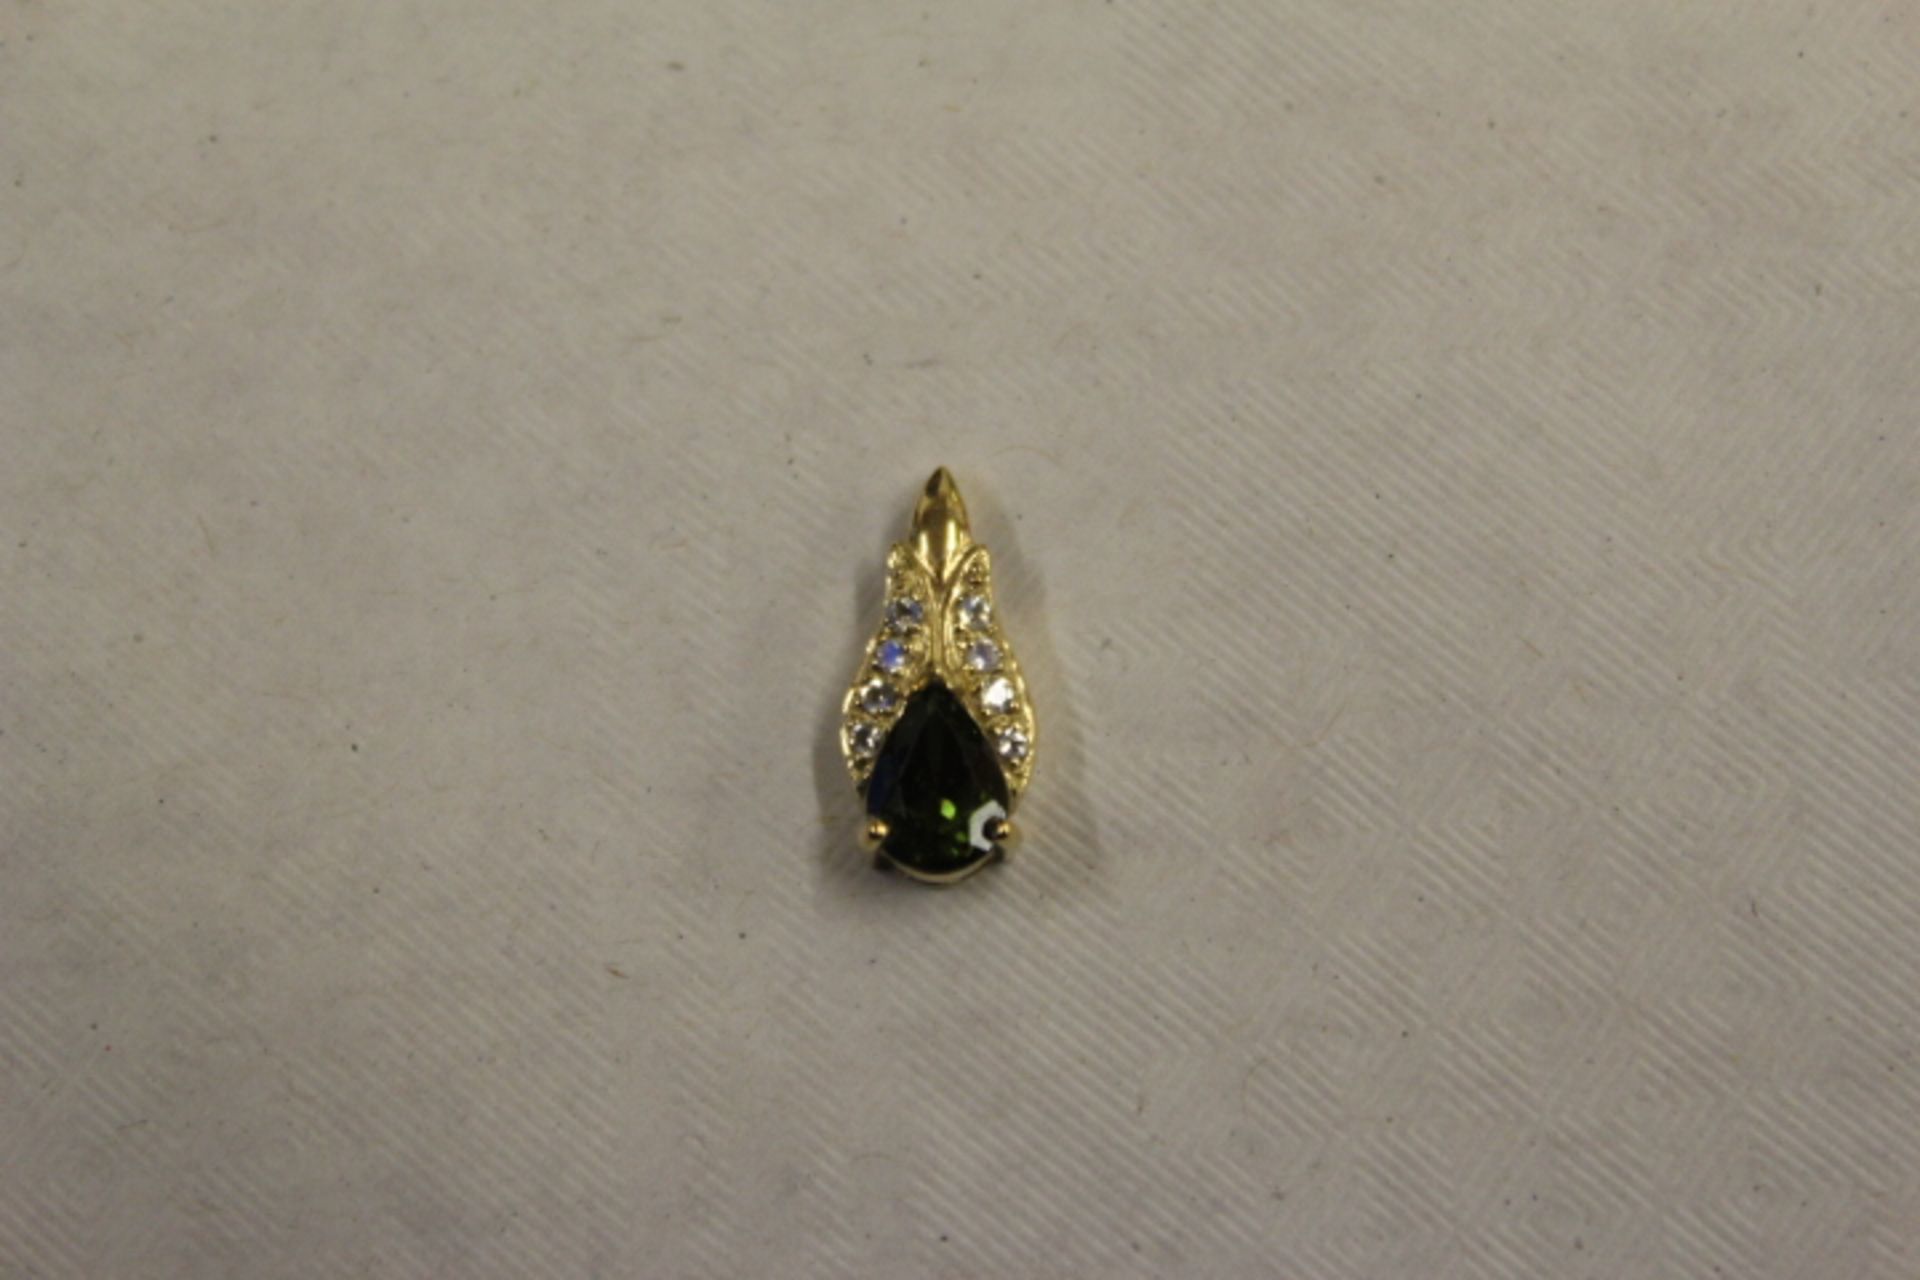 A 9ct Gold pear cut Tourmaline =0.796 carat  with 8 x rainbow moonstones= 0.117 carat Rainbow